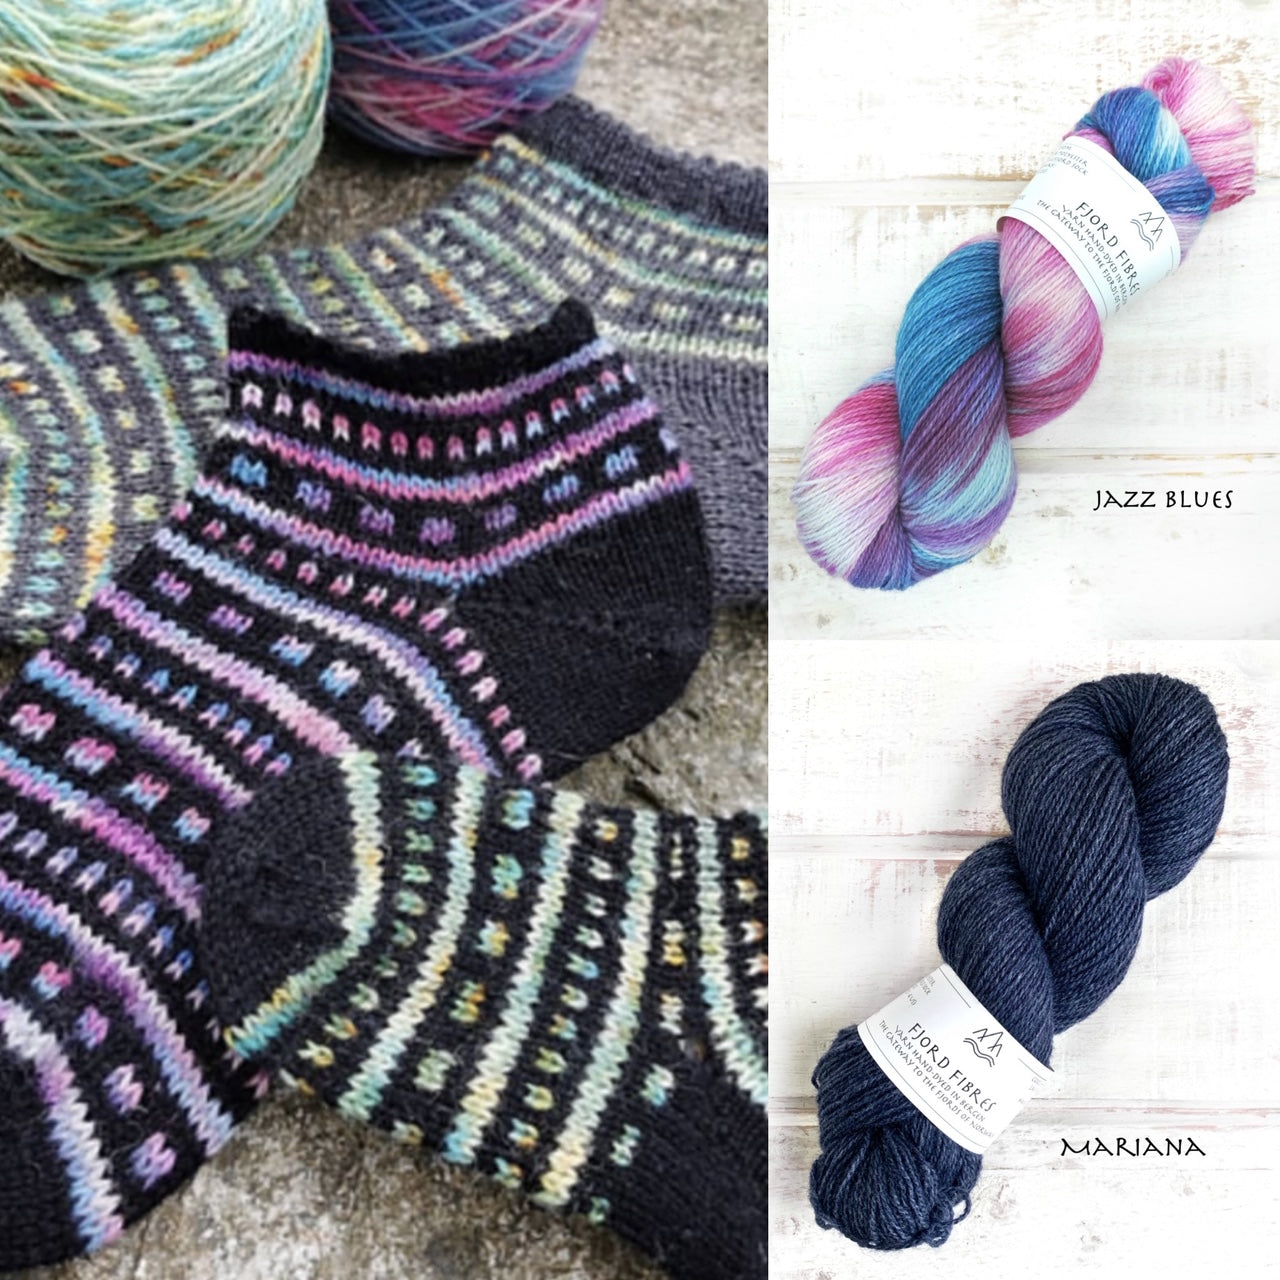 All that Jazz Socks Kit - Jazz Blues/Mariana -  Yarn and Printed Pattern in English/Norwegian